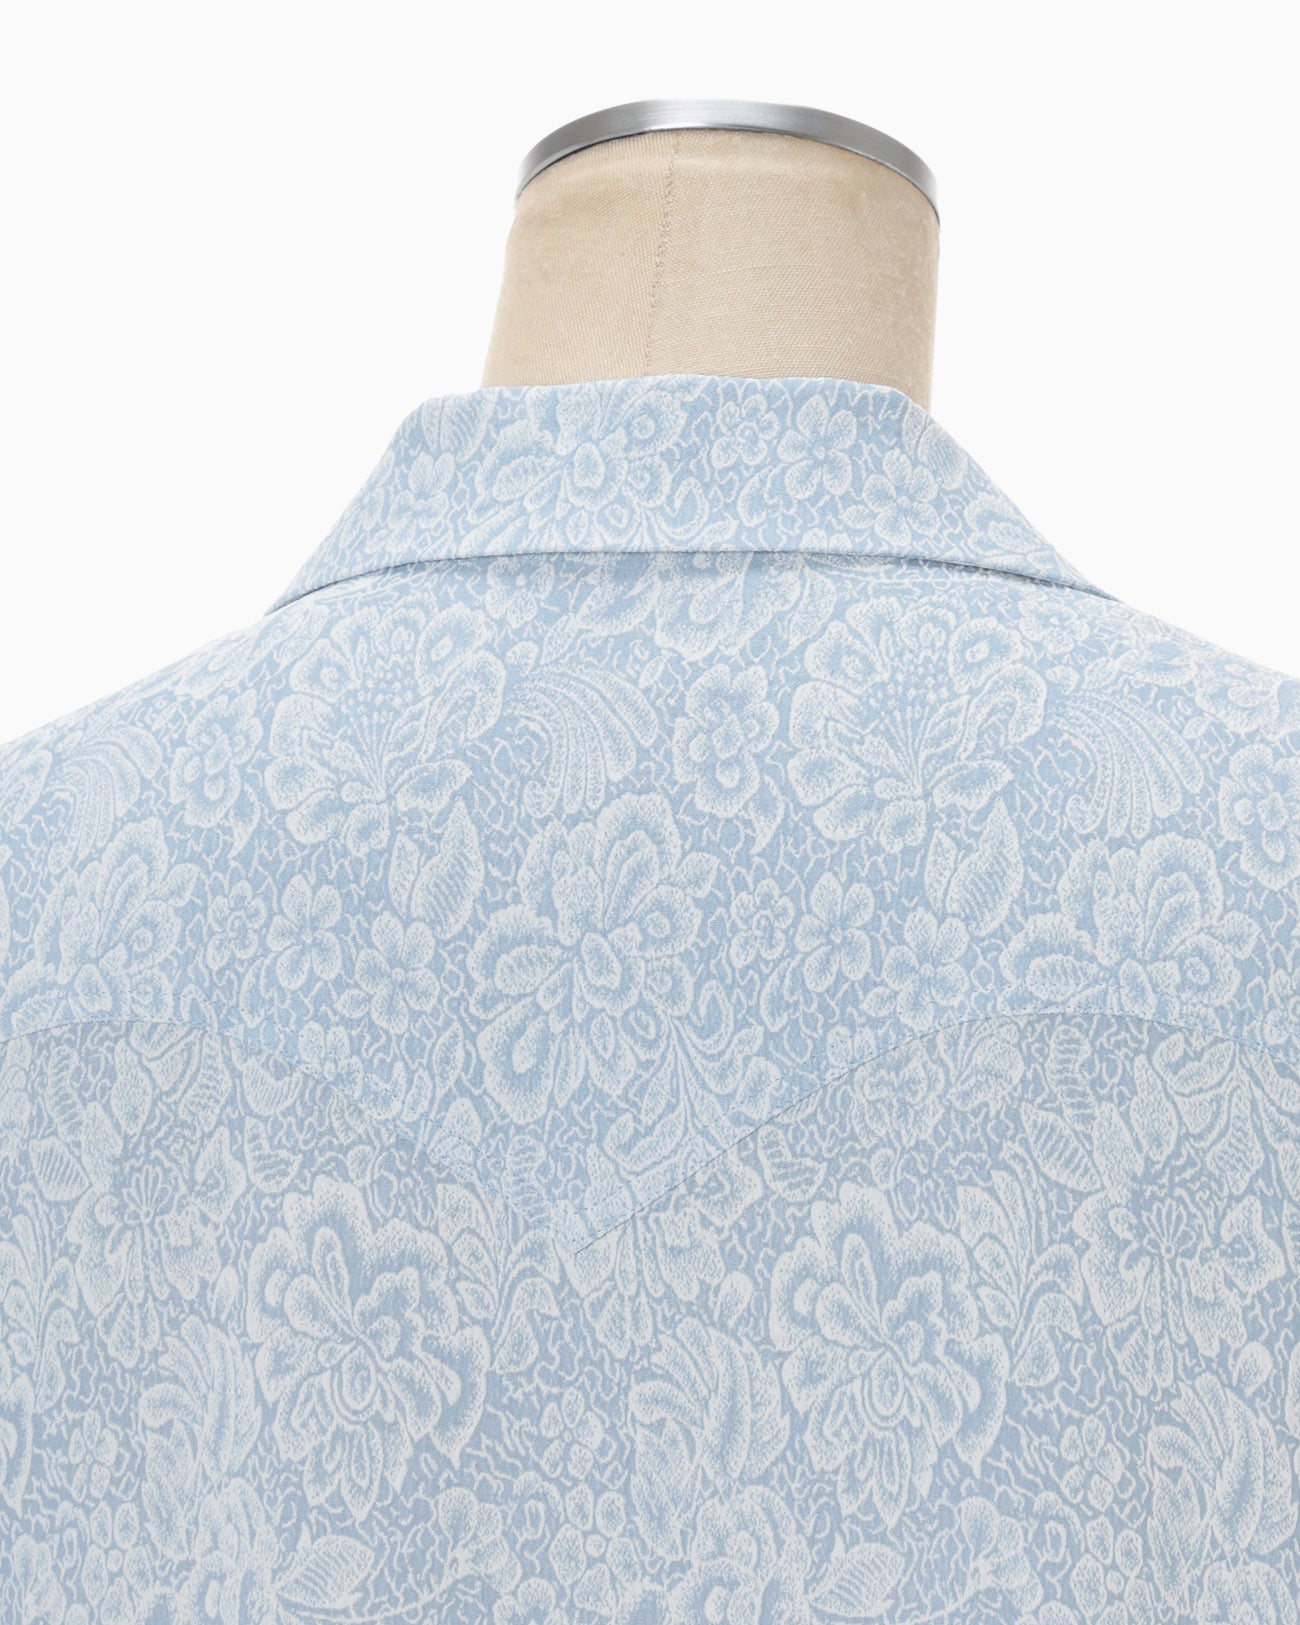 Floral Pattern Acetate Rayon Jacquard Shirt - blue